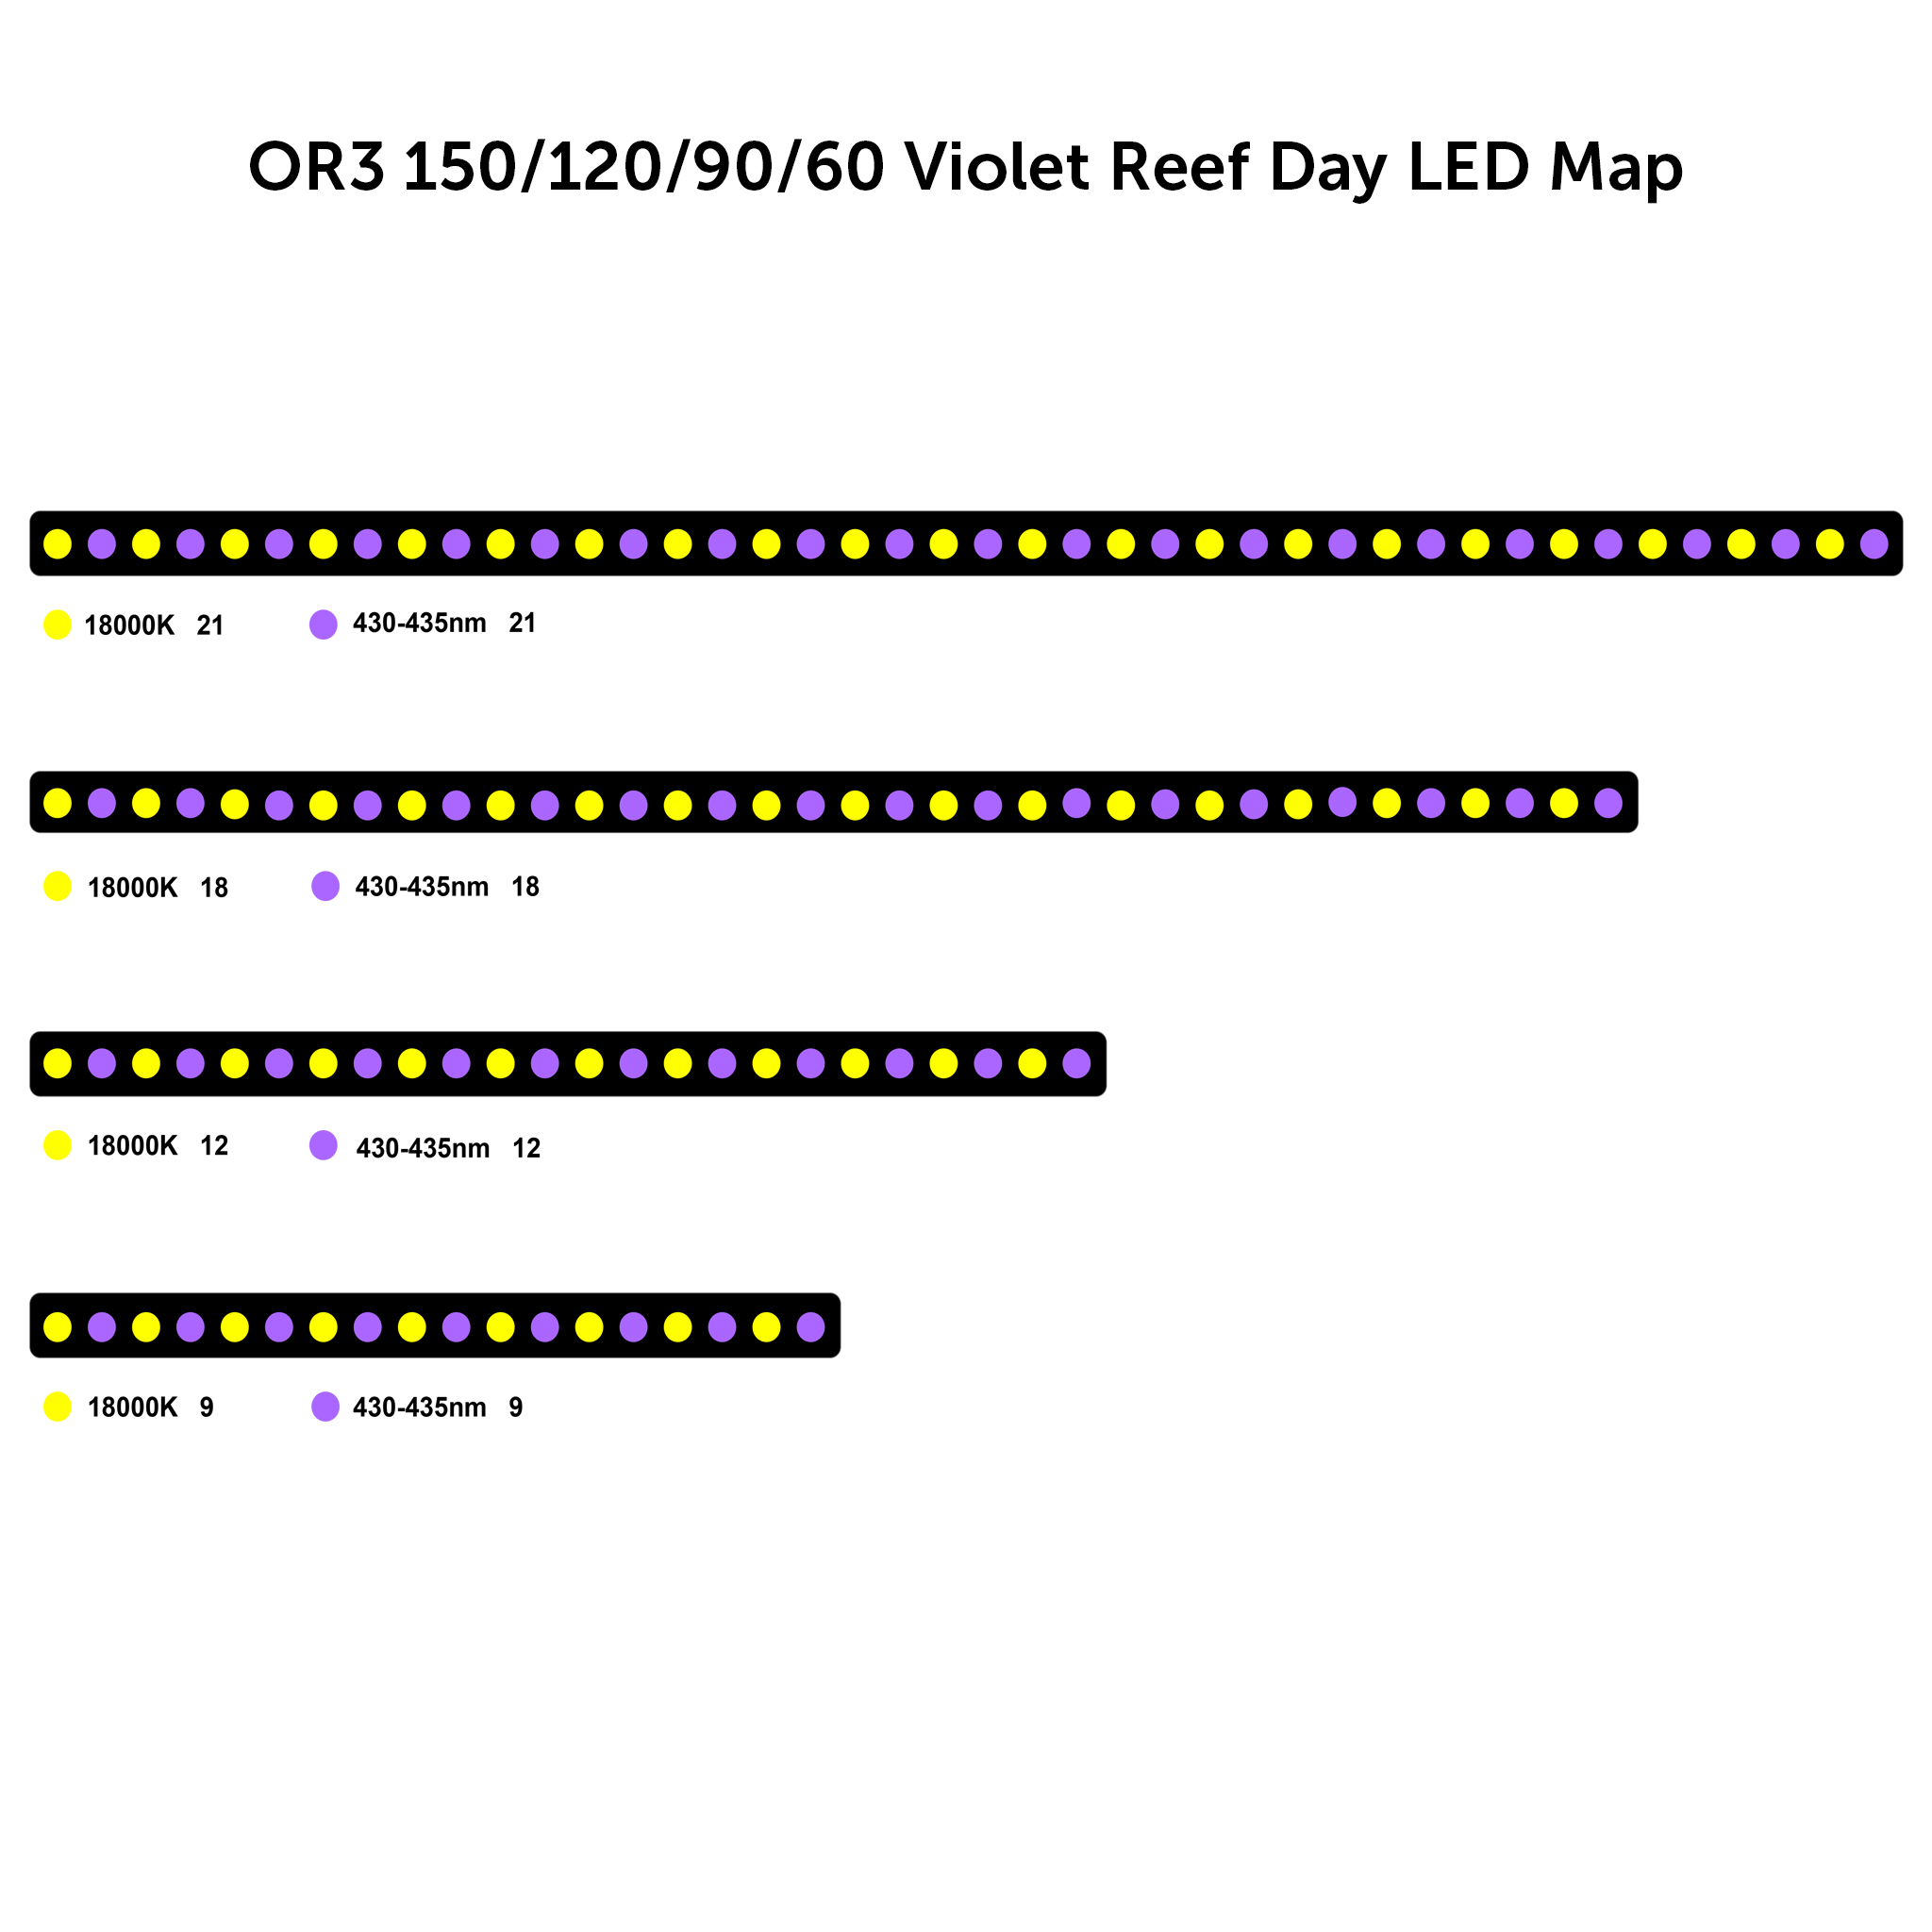 Mapa led OR3 violet reef day